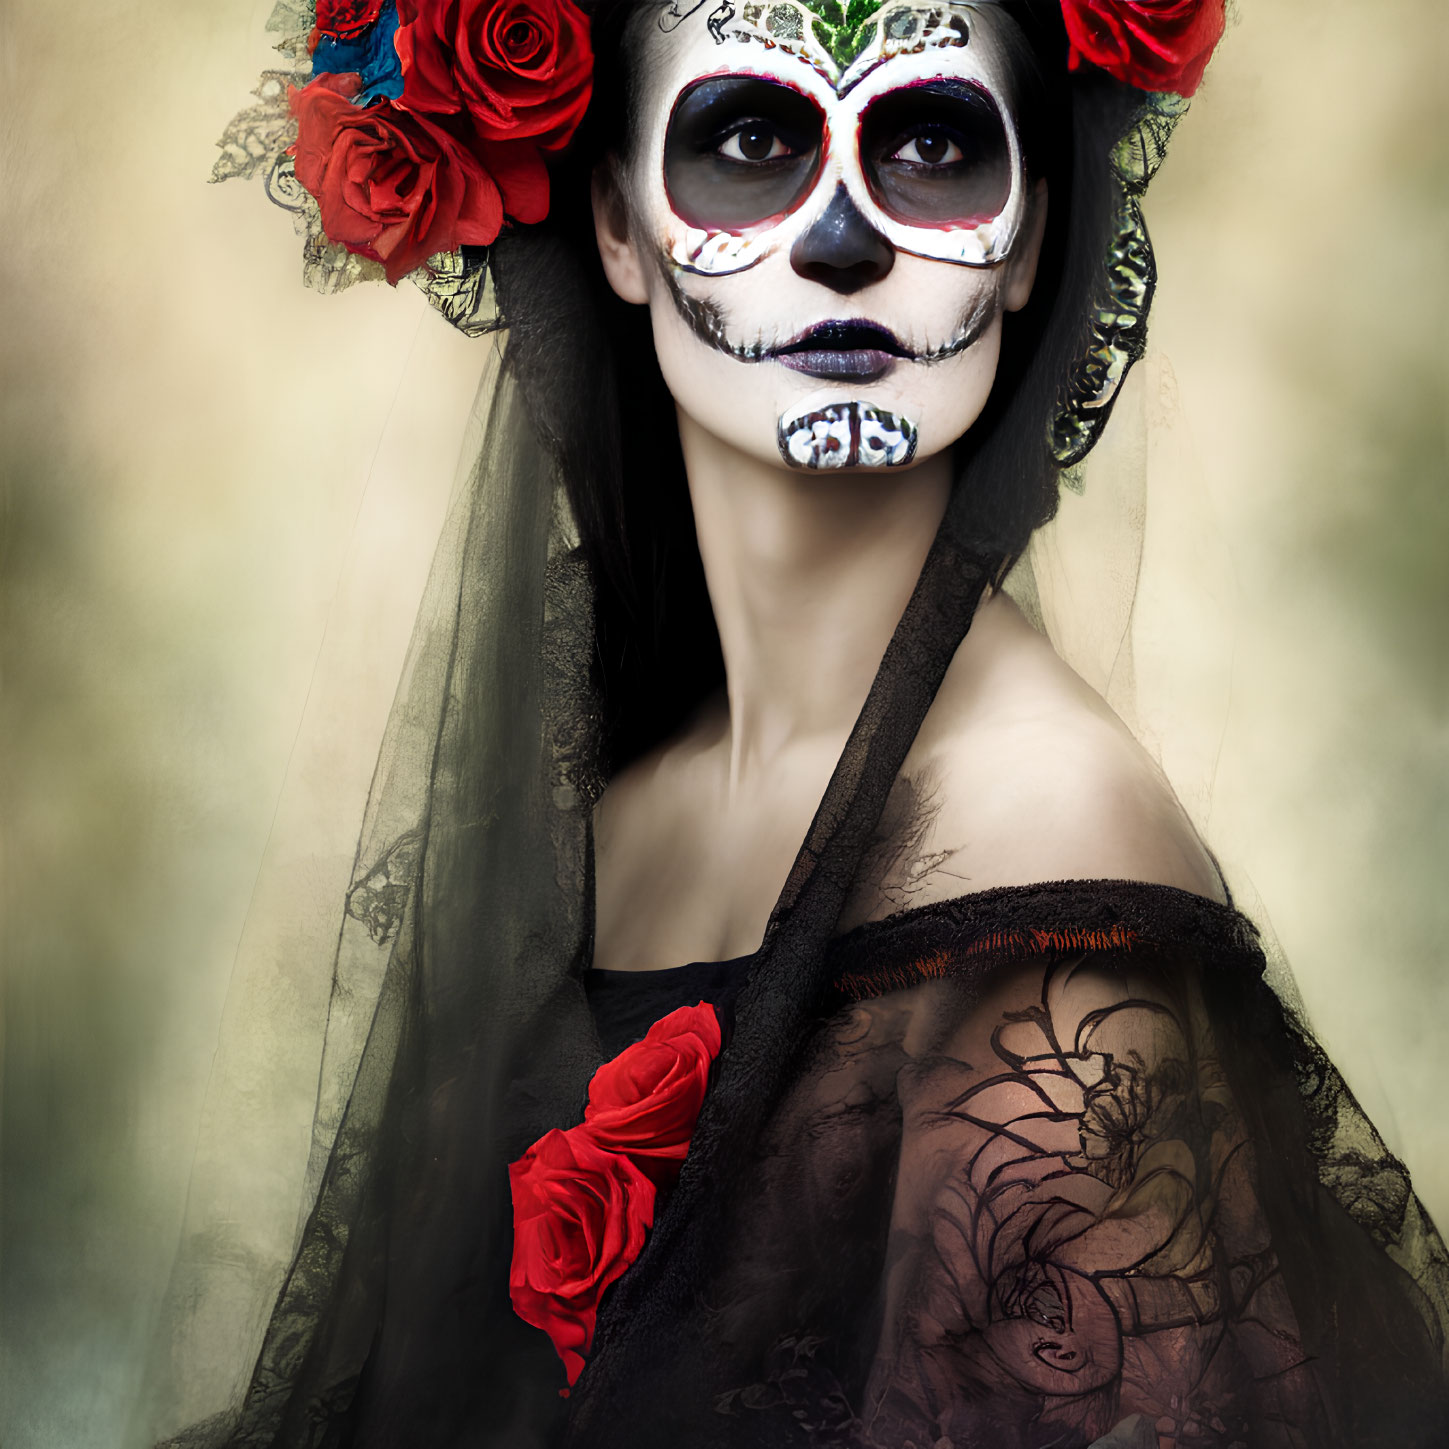 Person with Dia de los Muertos makeup in floral headpiece and black outfit.